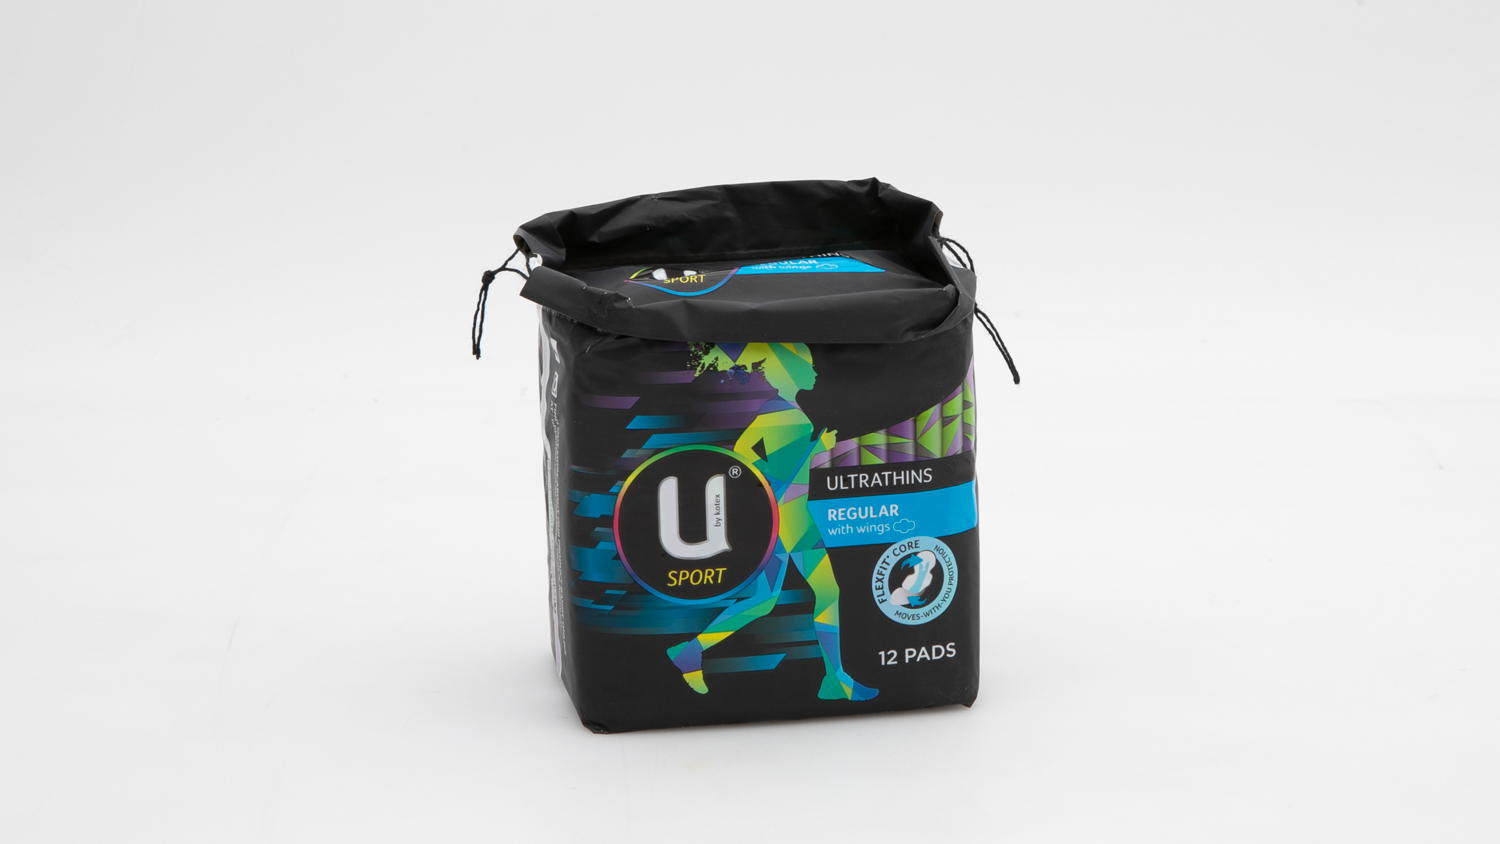 U by Kotex Sport Ultrathins Regular with wings carousel image